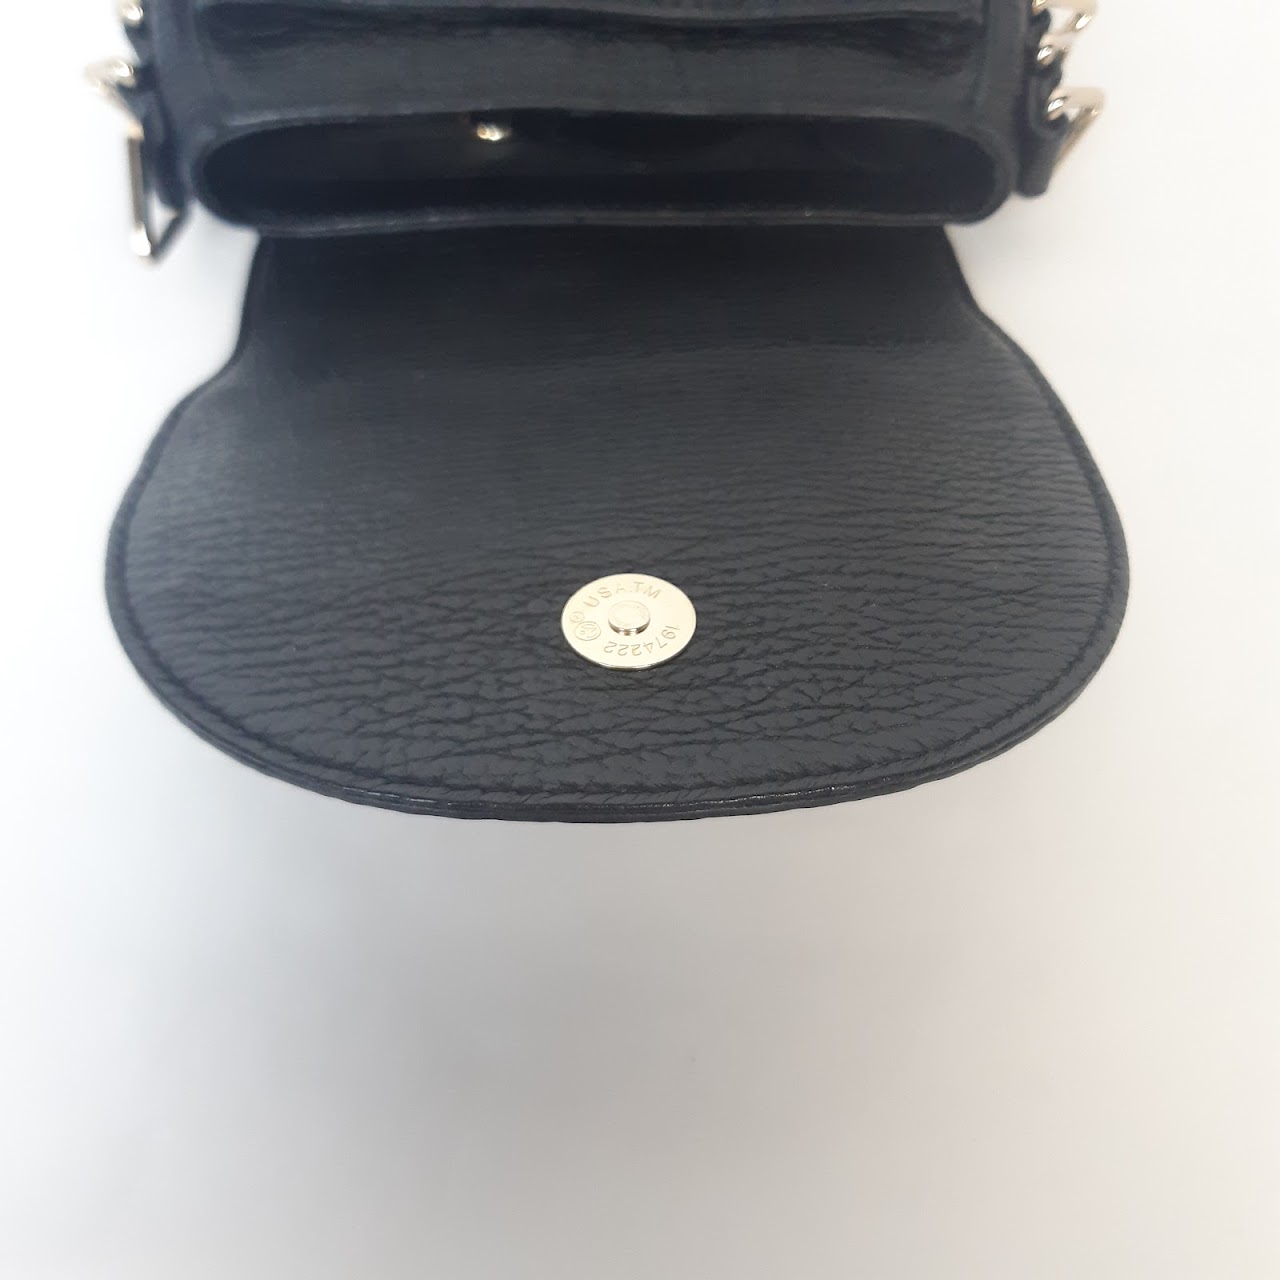 Rebecca Minkoff Black Leather Crossbody Bag